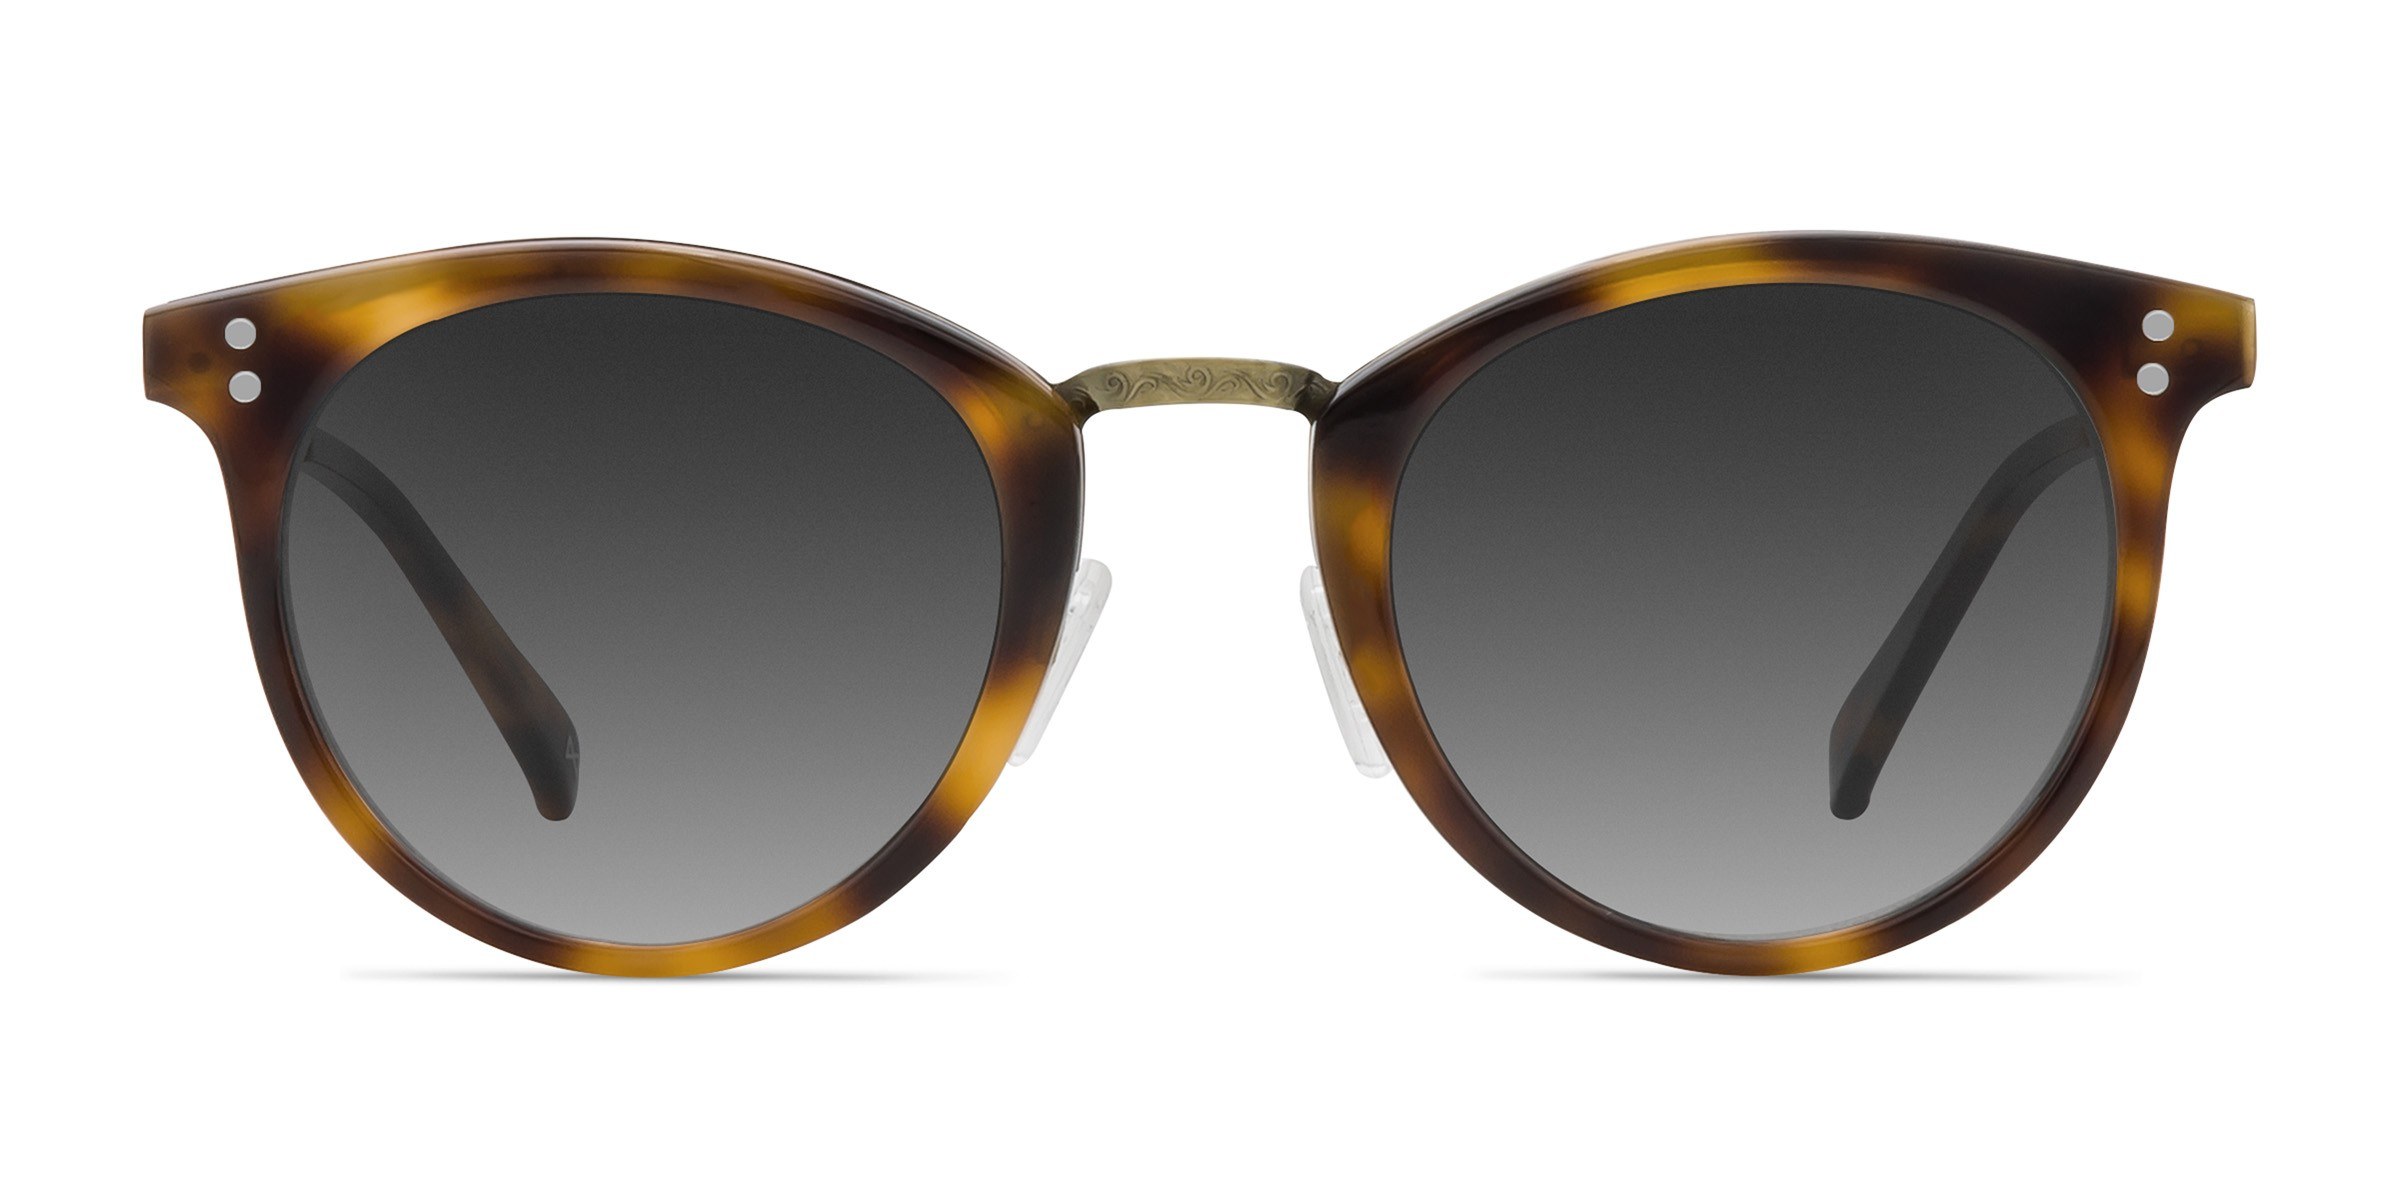 Sun Nostalgia - Round Caramel Frame Sunglasses For Women | Eyebuydirect